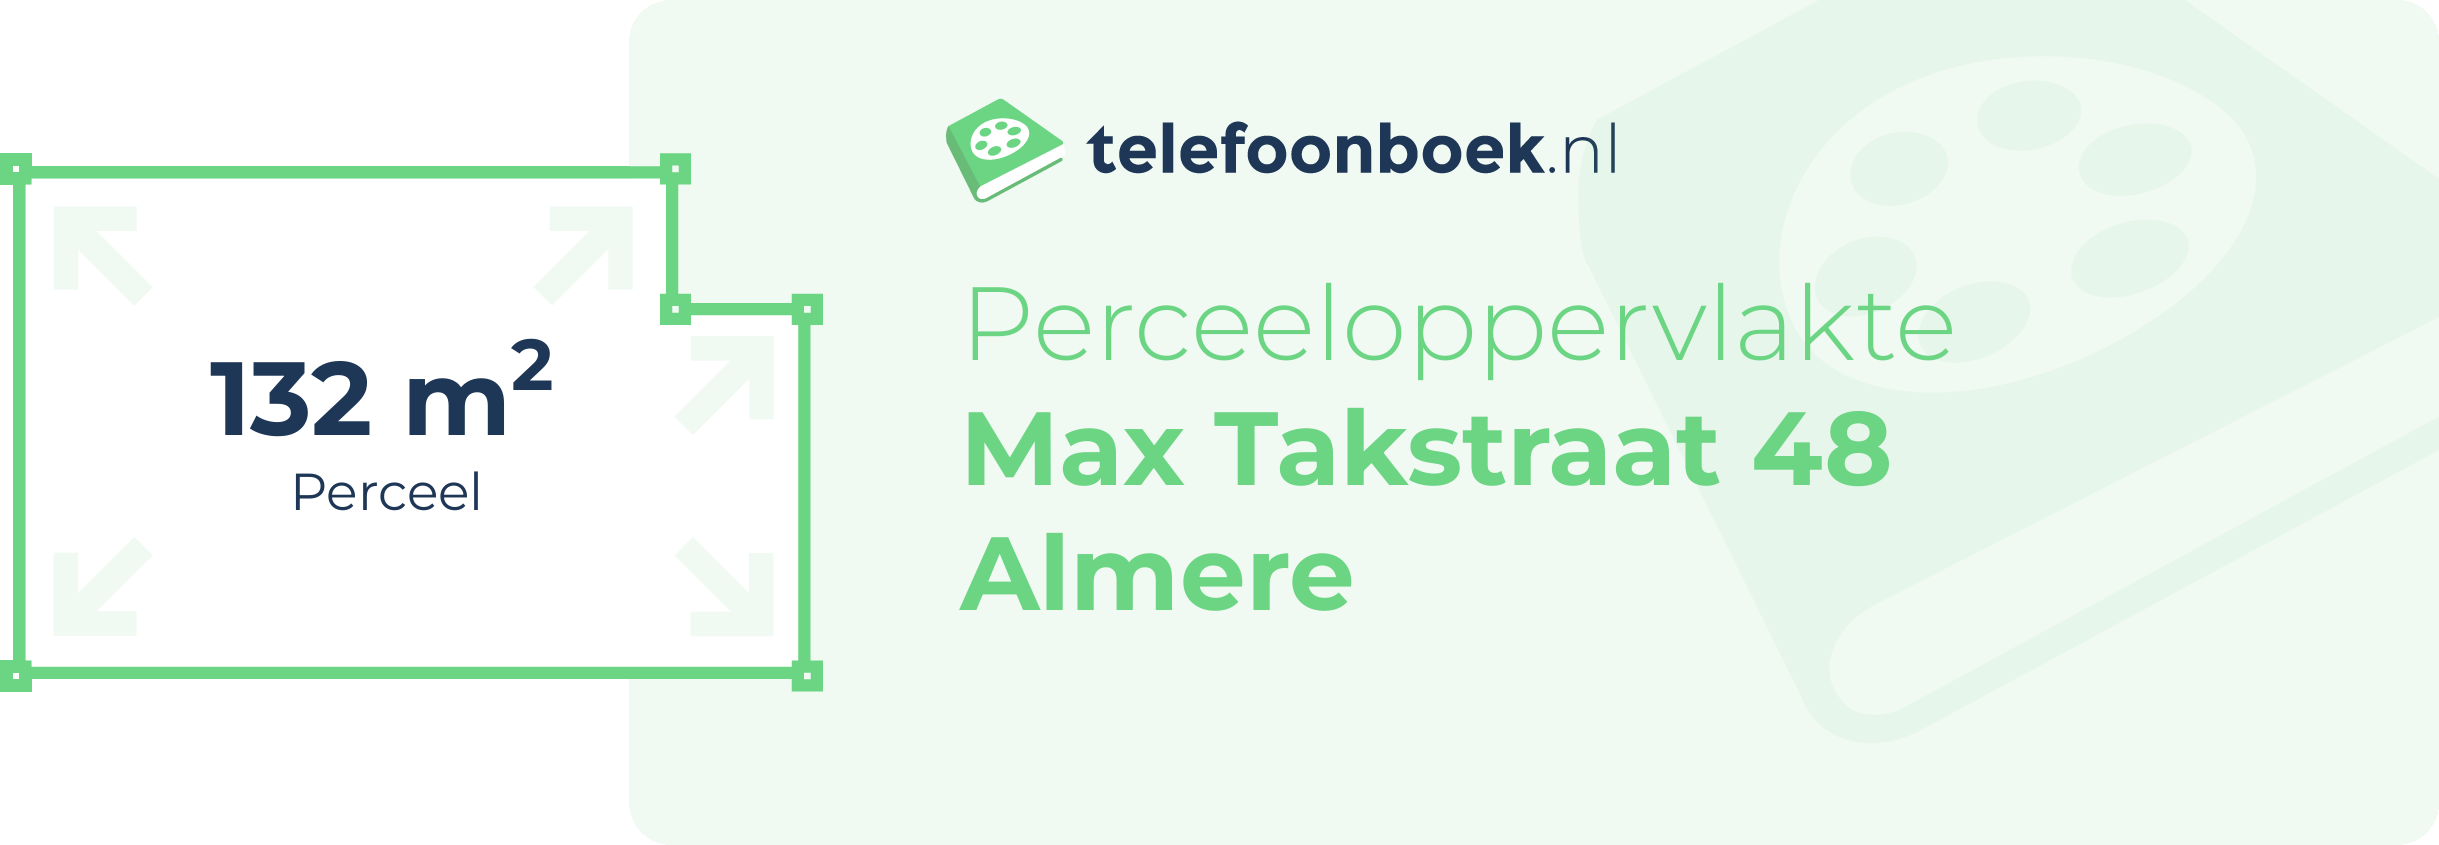 Perceeloppervlakte Max Takstraat 48 Almere